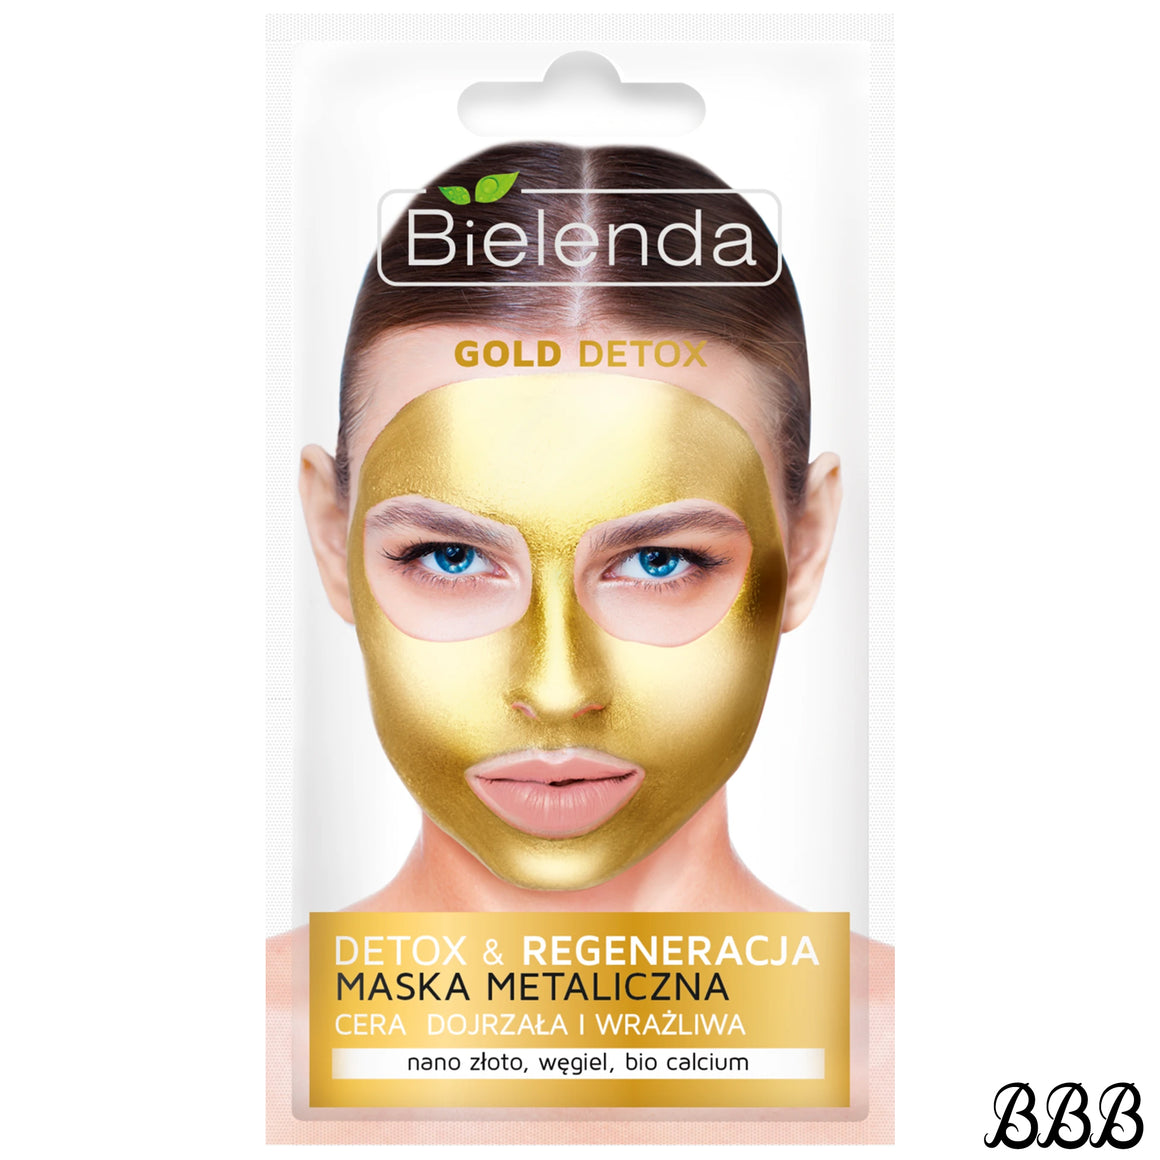 Bielenda GOLD DETOX Detoxifying Face Mask for Matured and Sensitive Skin - 8g